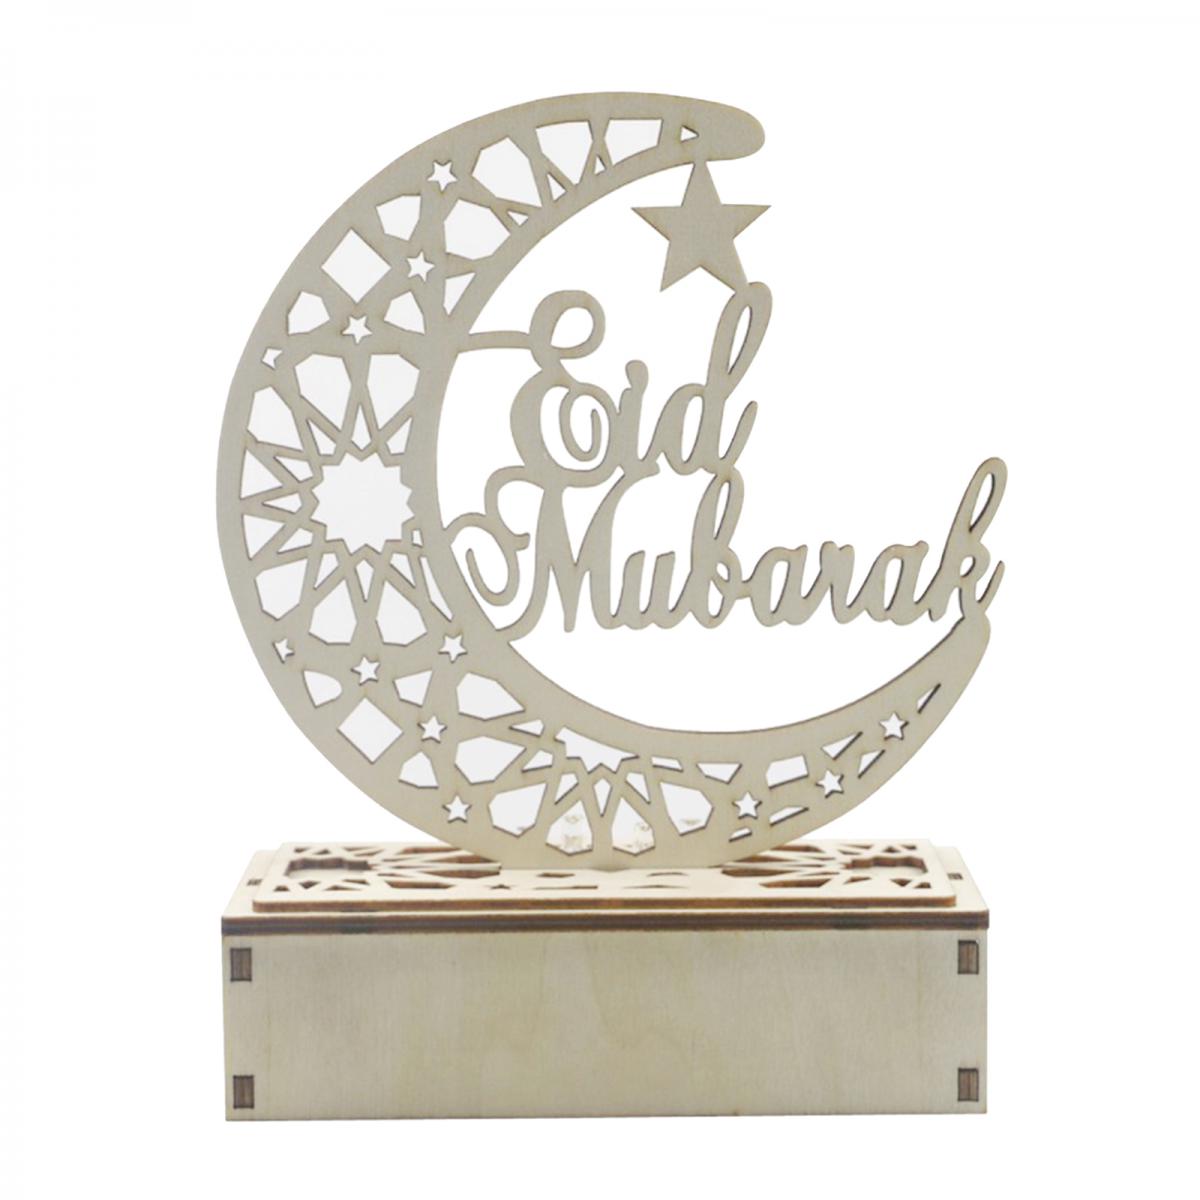 marque generique - Ramadan Mubarak Veilleuse LED Musulman Ramadan